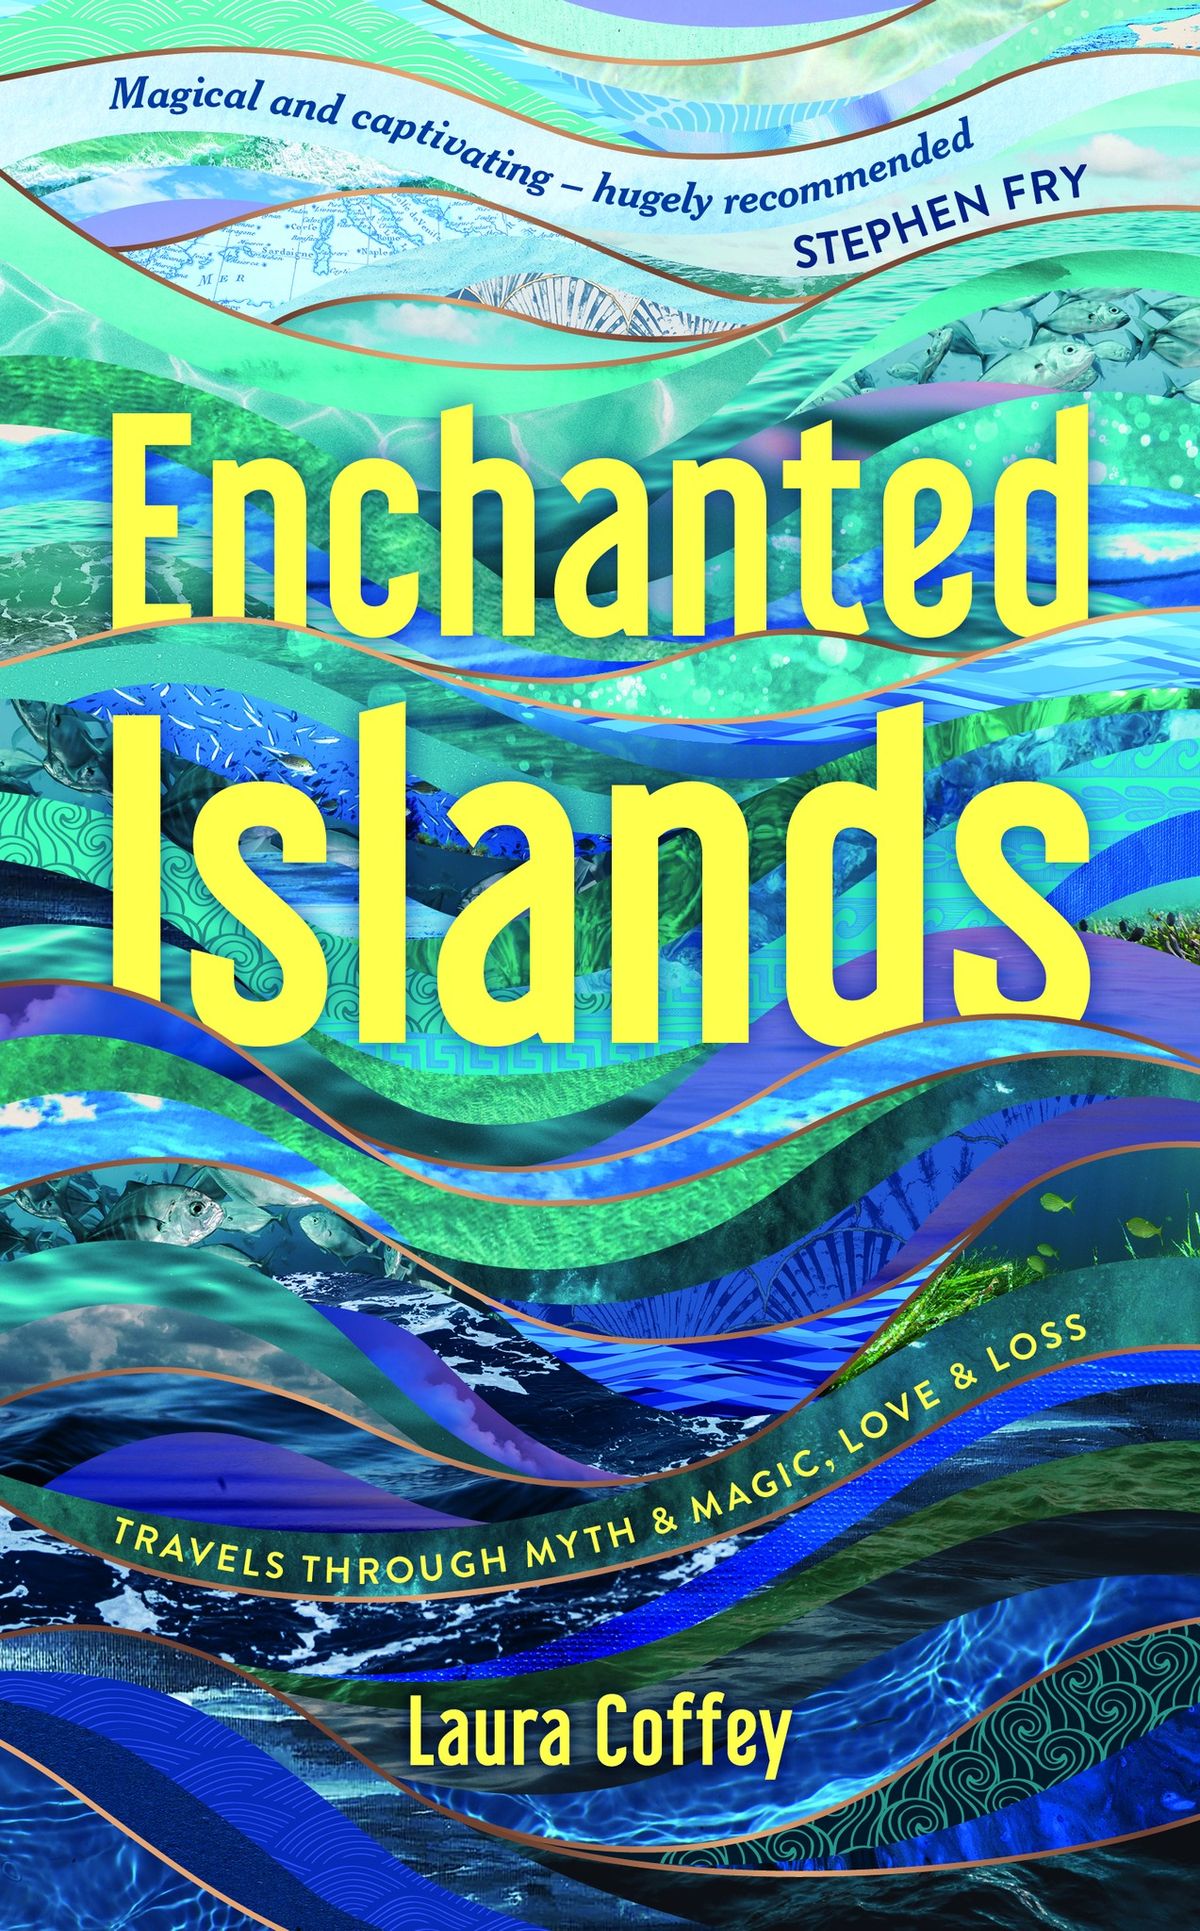 Laura Coffey - Enchanted Islands Travels through Myth & Magic, Love & Loss \u2013 A Memoir